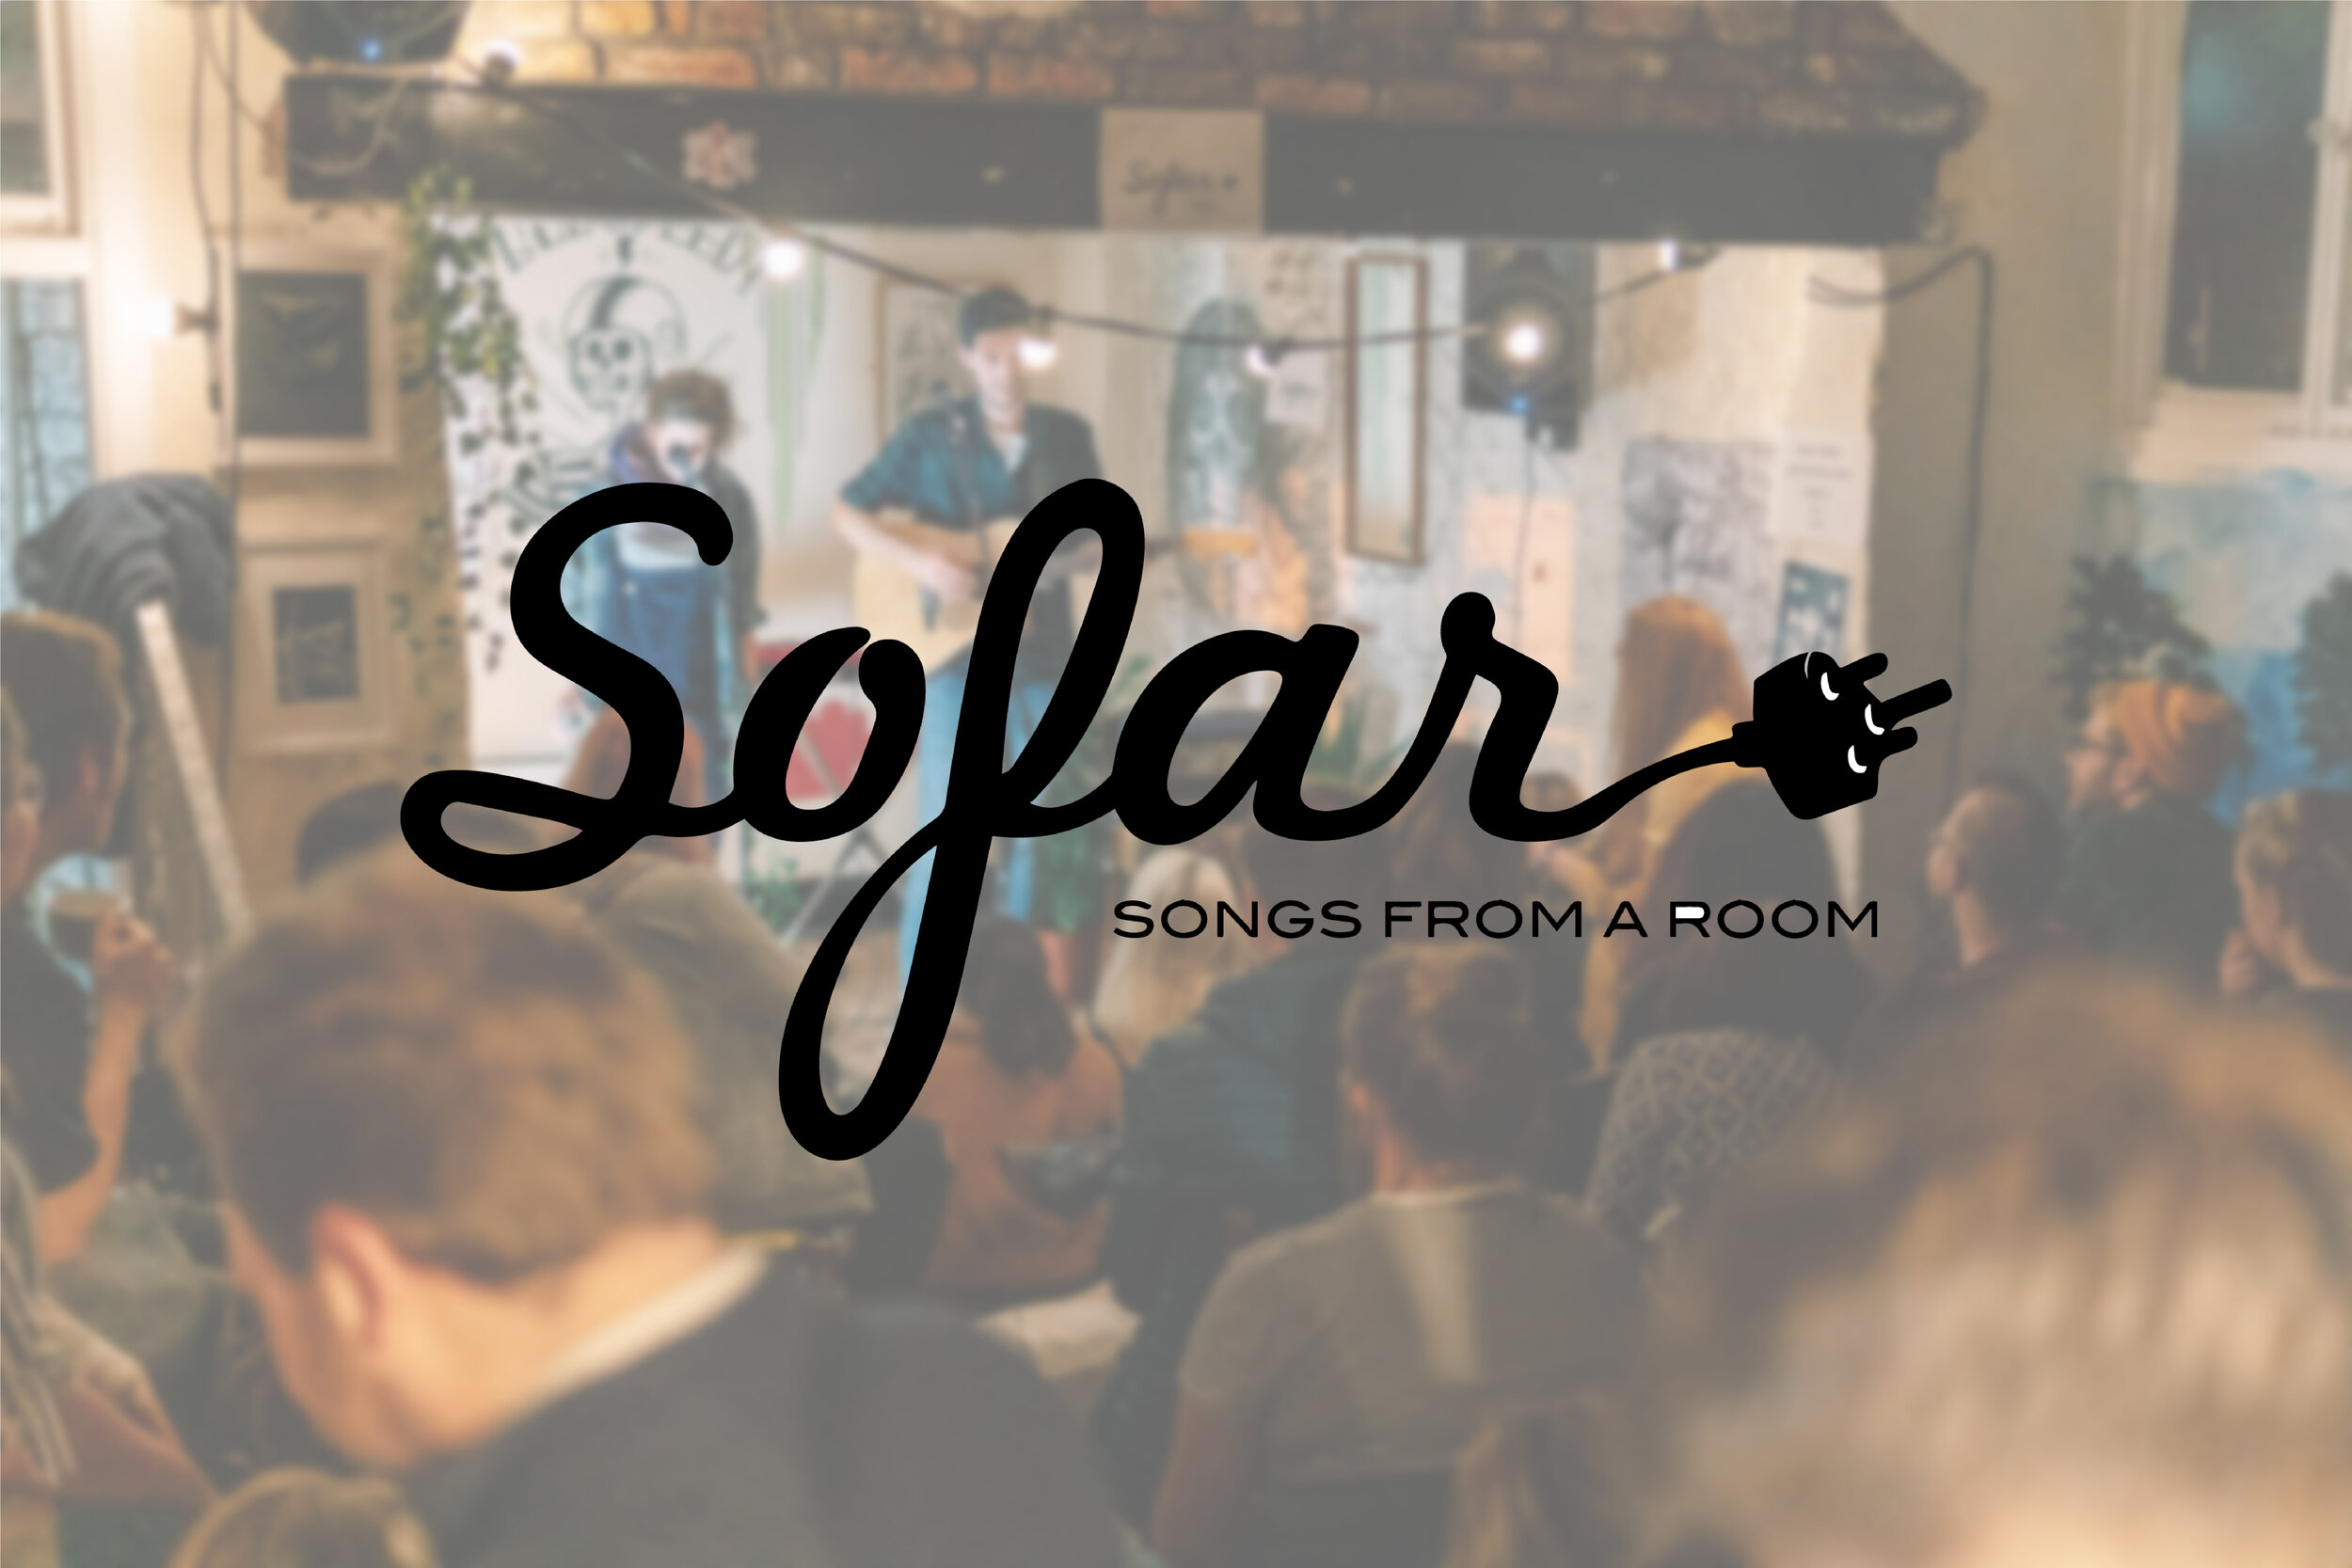 Sofar sounds promo code